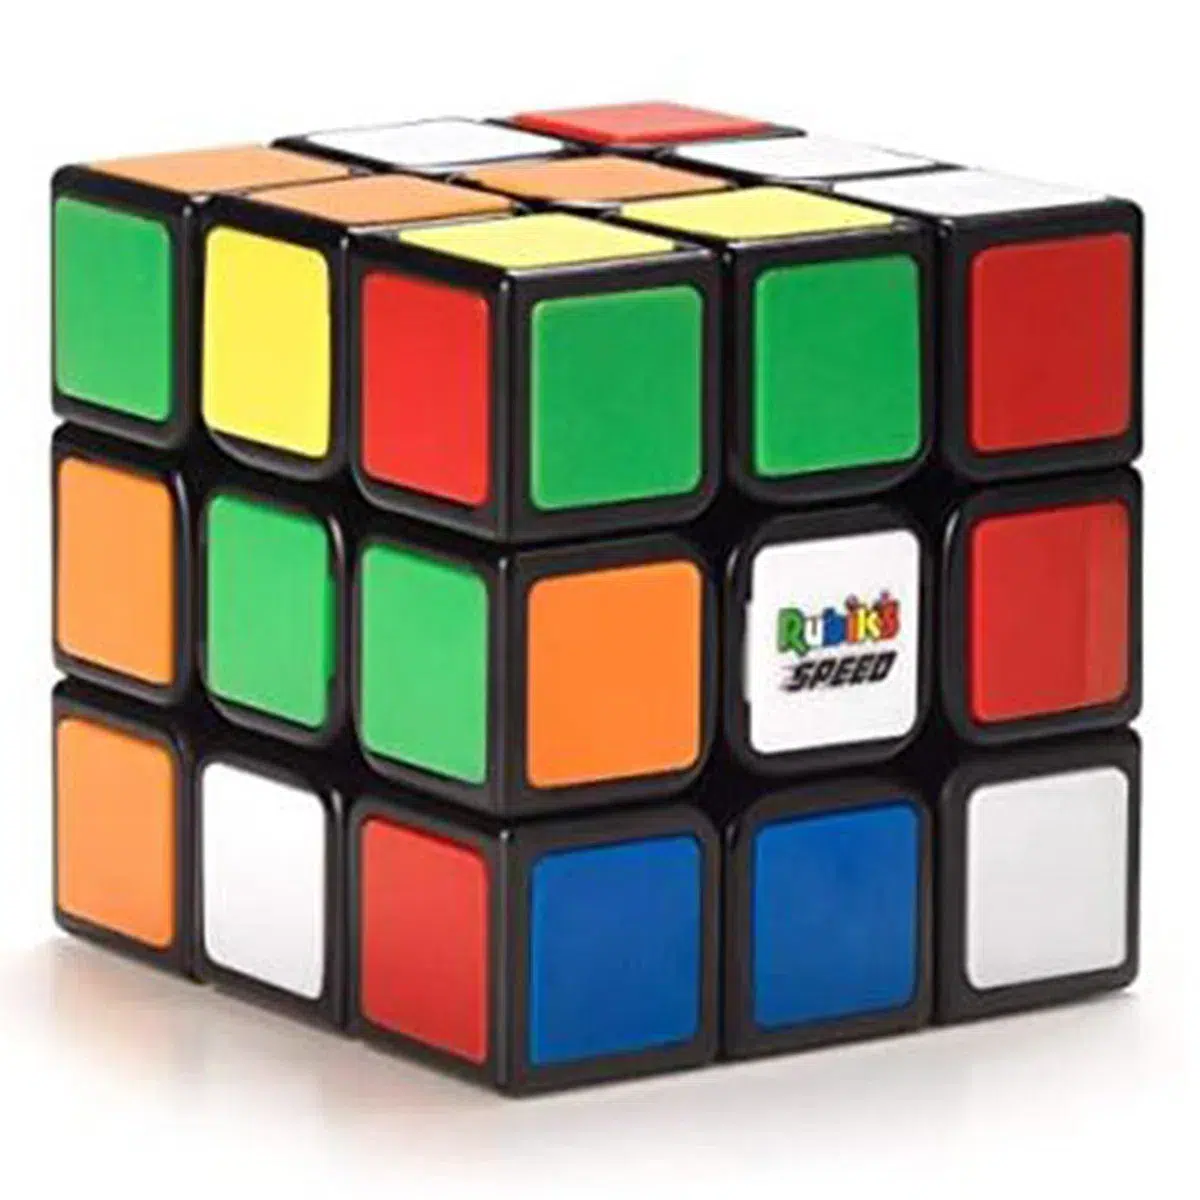 Rubik's Speed Cube - Rubik's 3x3 Speed mit Magneten